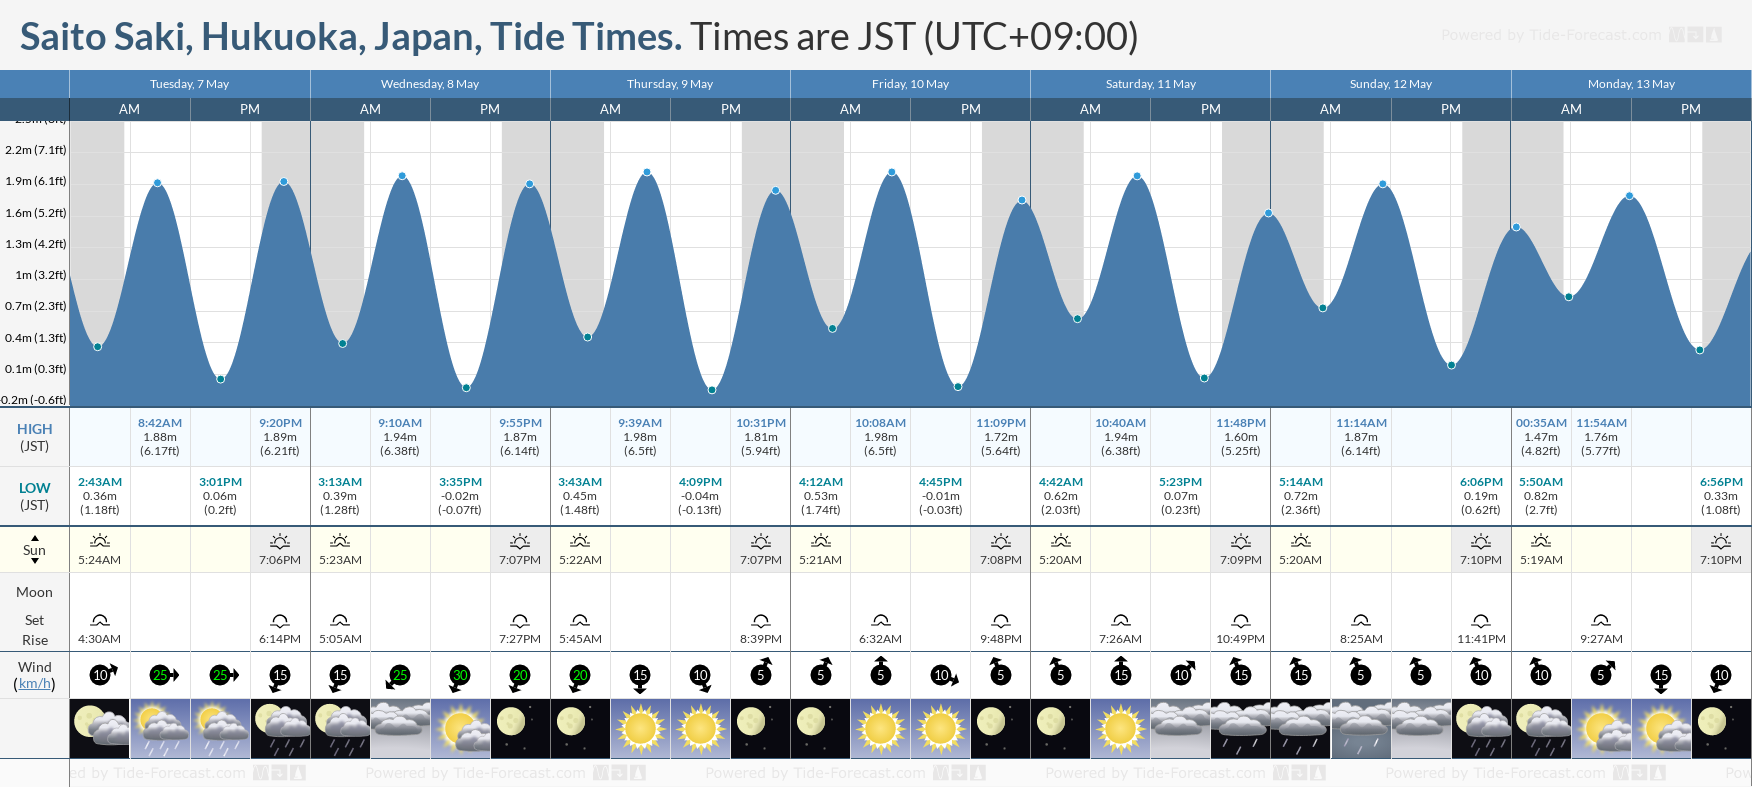 Saito Saki, Hukuoka, Japan Tide Chart including high and low tide times for the next 7 days